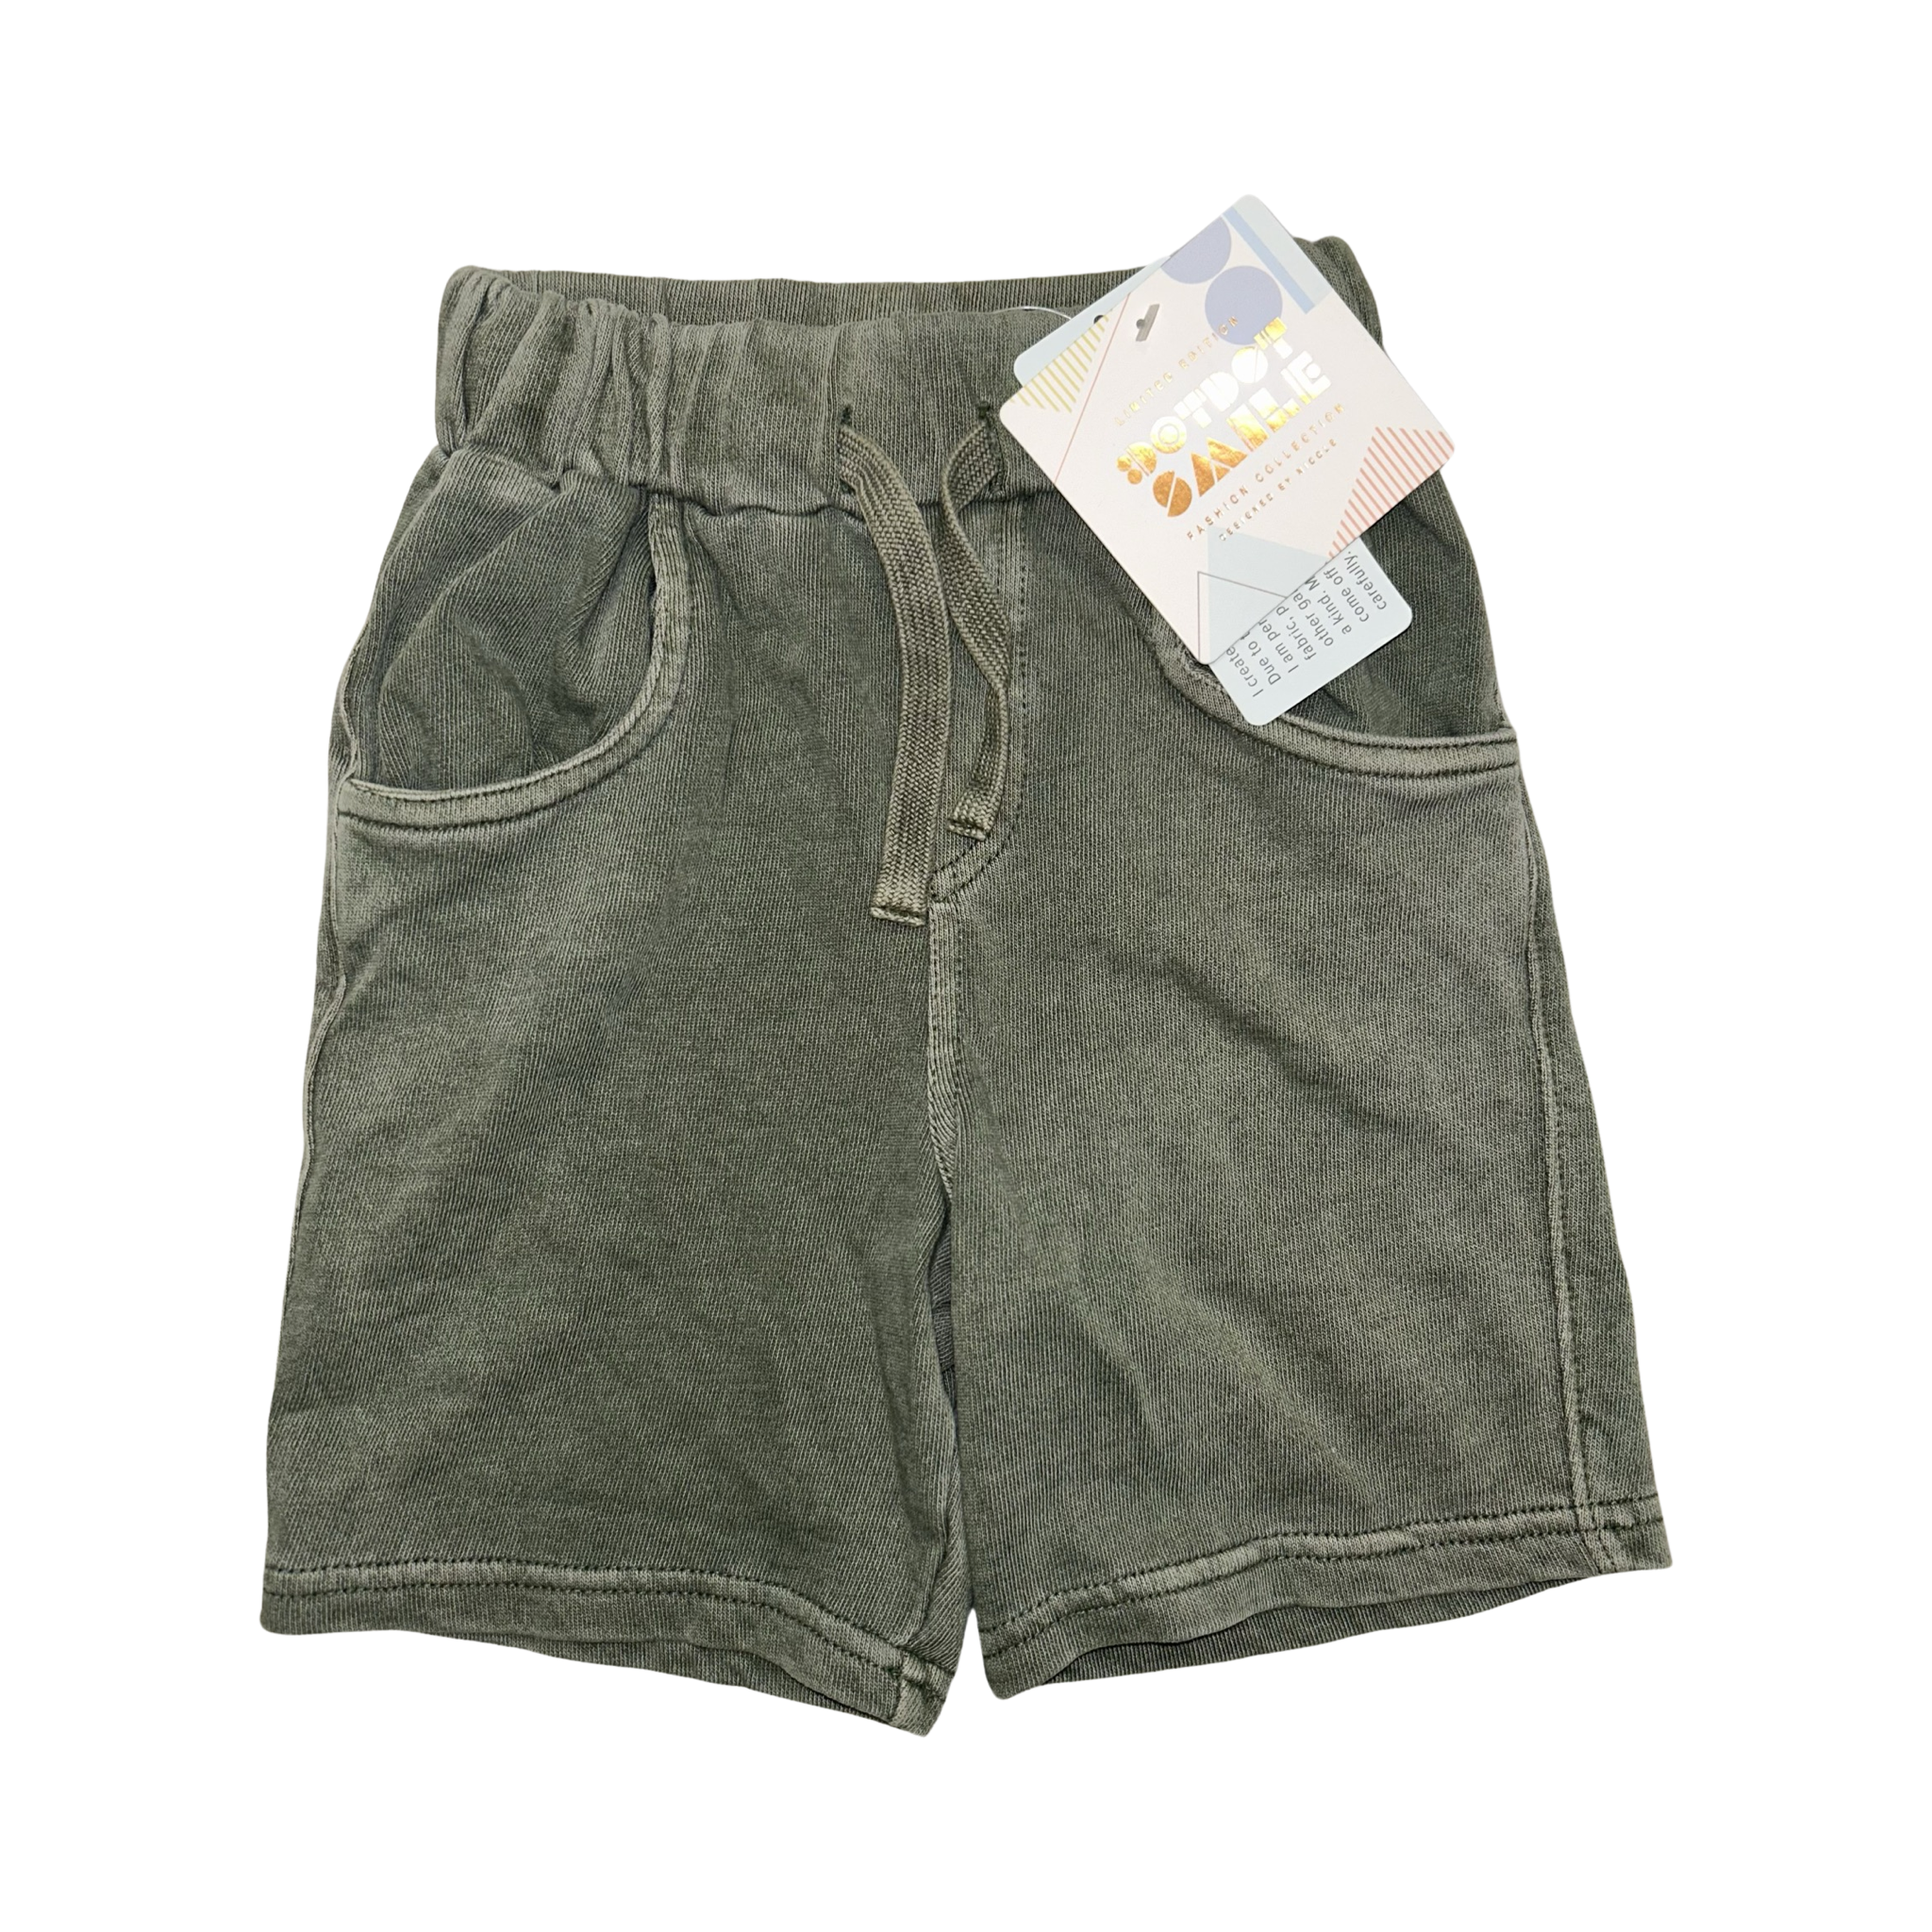 NWT shorts by DotDotSmile size 3-4